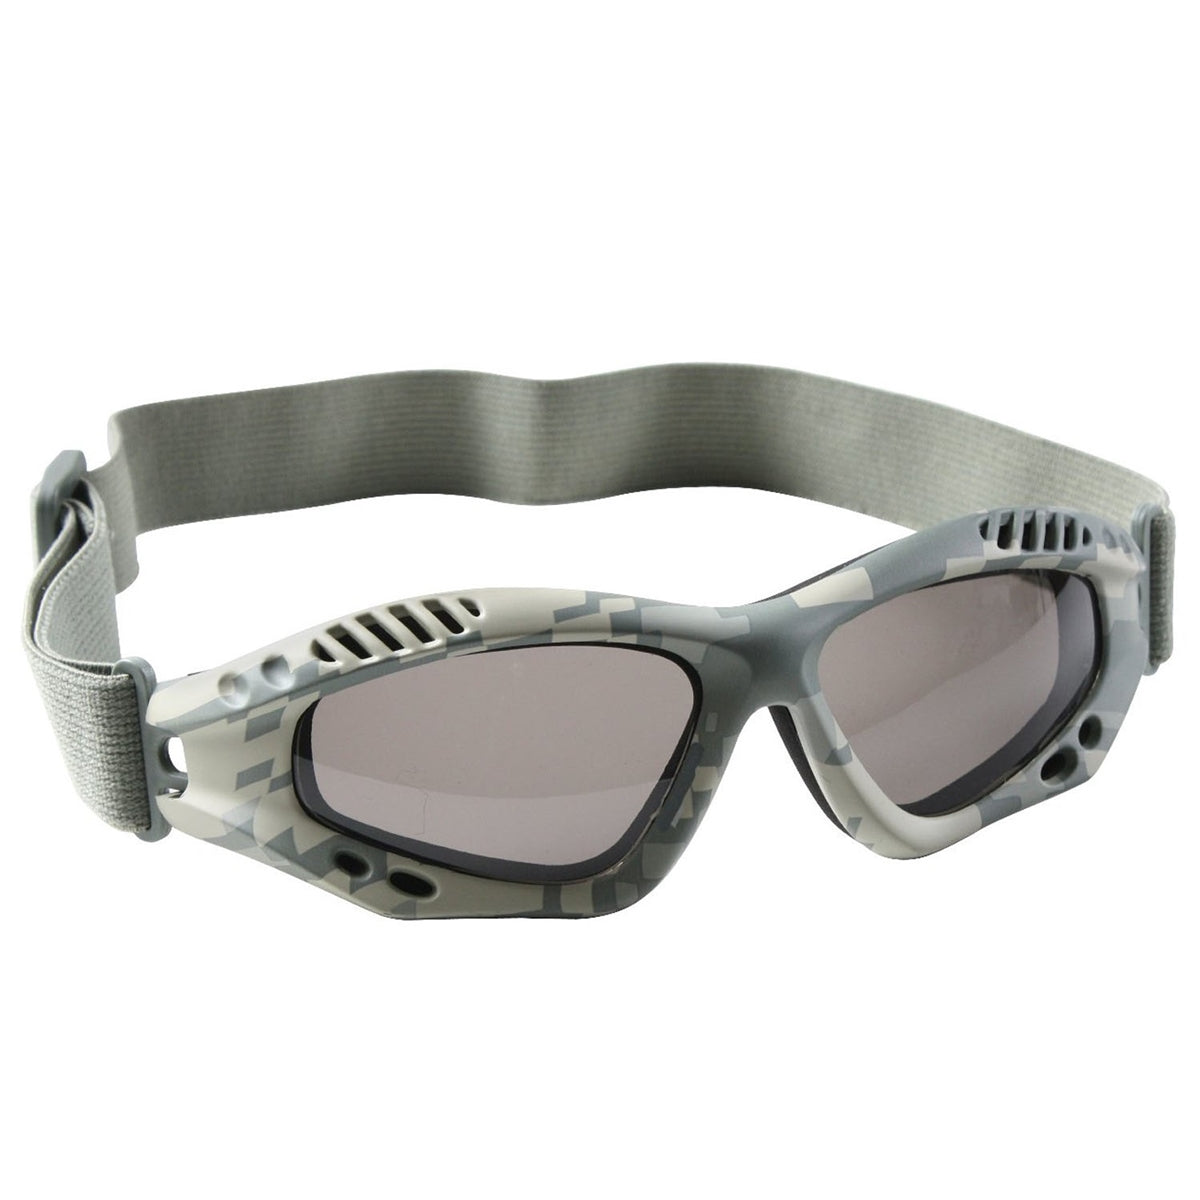 Rothco Ventec Tactical Goggles - ACU Digital Camo